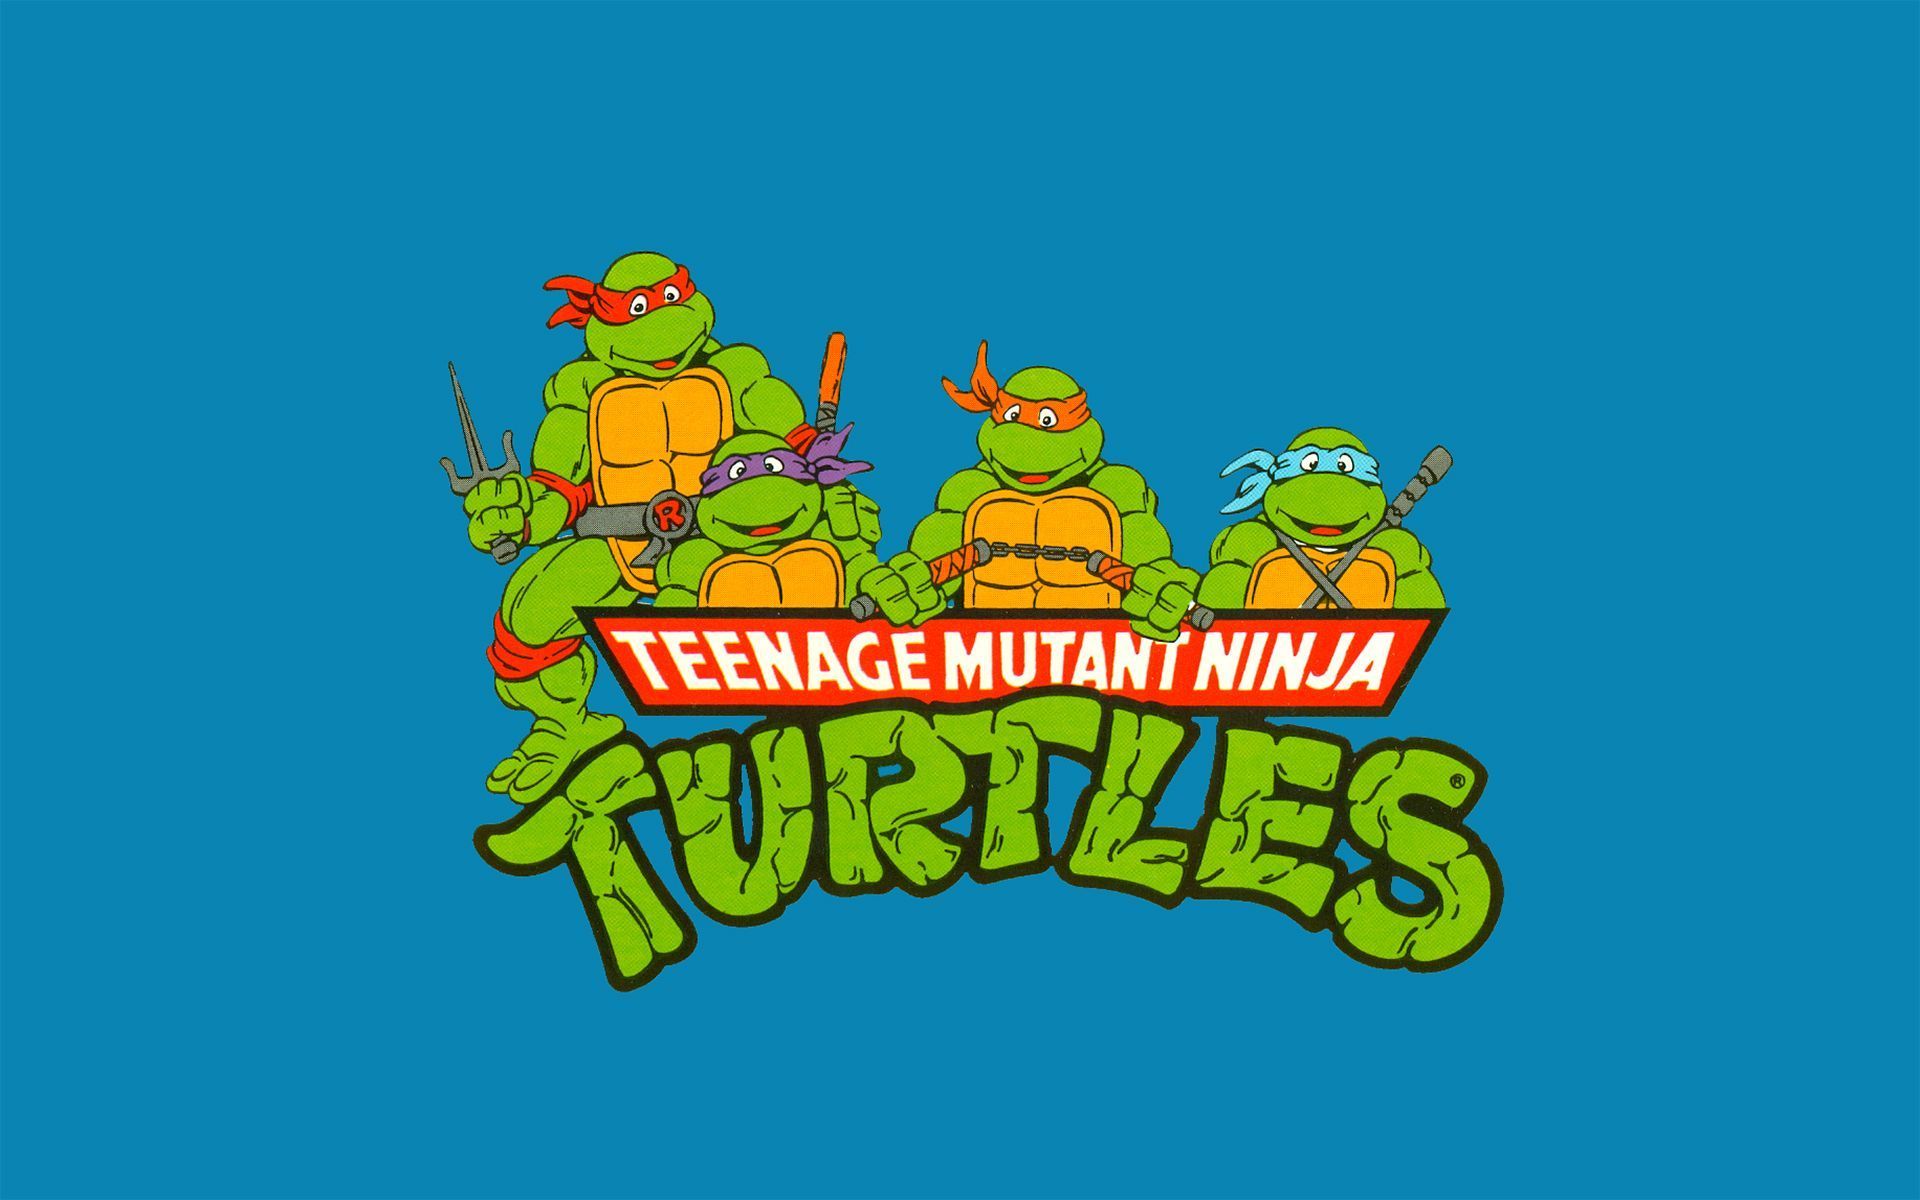 Teenage mutant ninja turtles Computer Wallpapers, Desktop